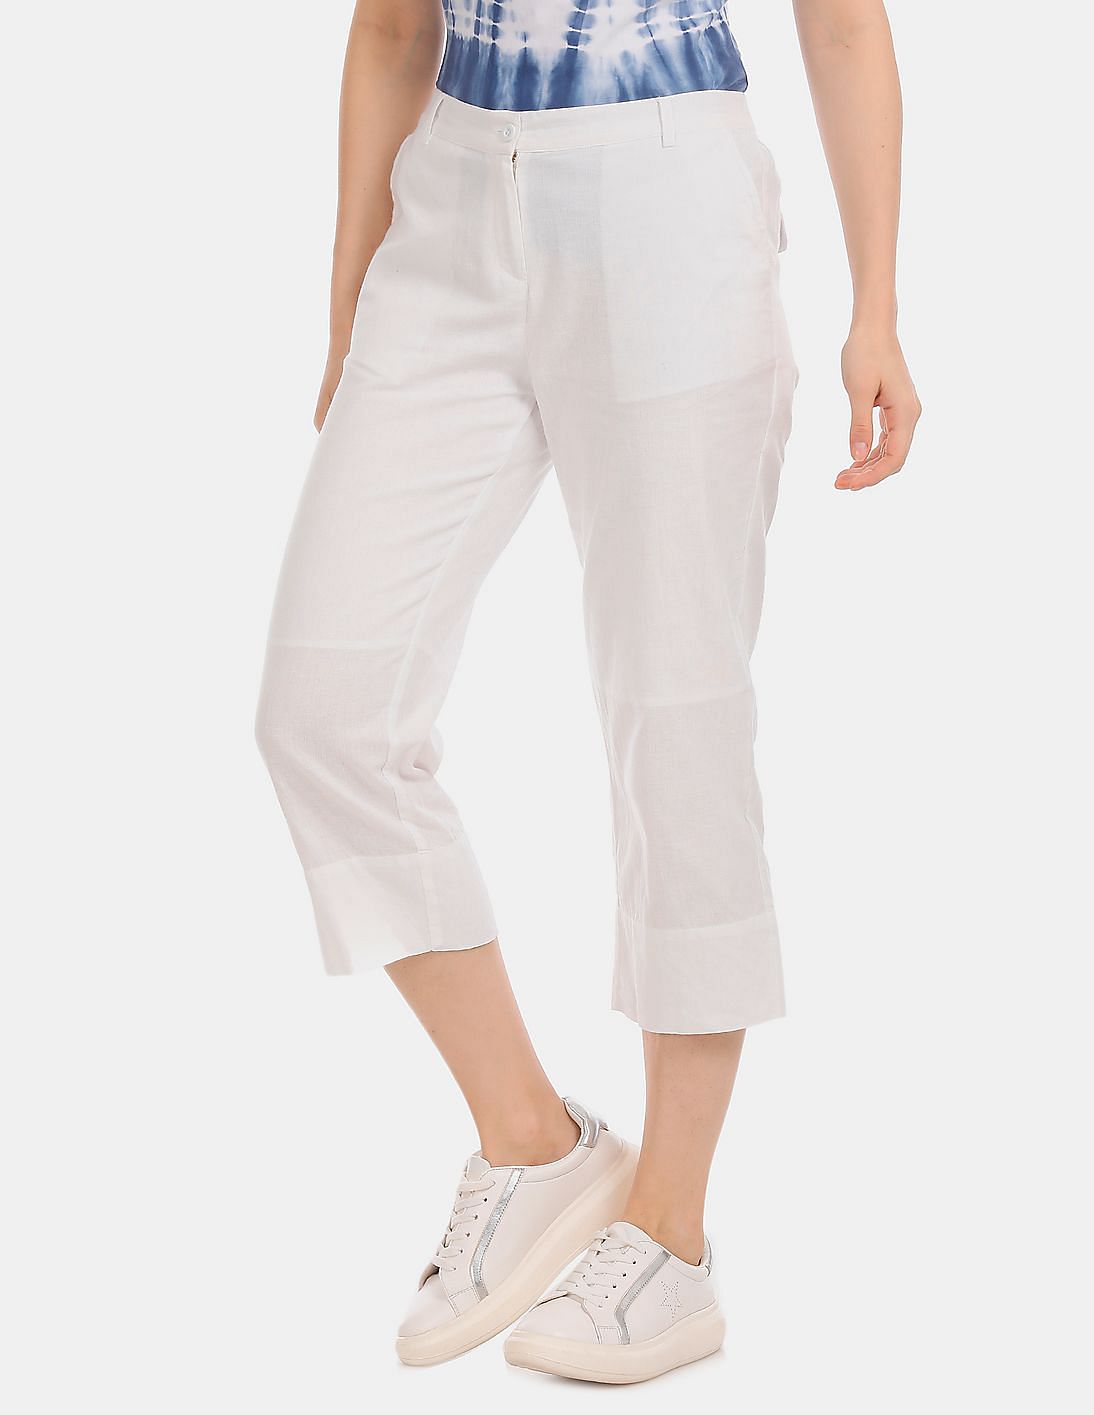 White Tops With Black Pants: A Full Guide For Women 2020 - Fashion Canons |  White shirt black pants, Black pants, Fashion